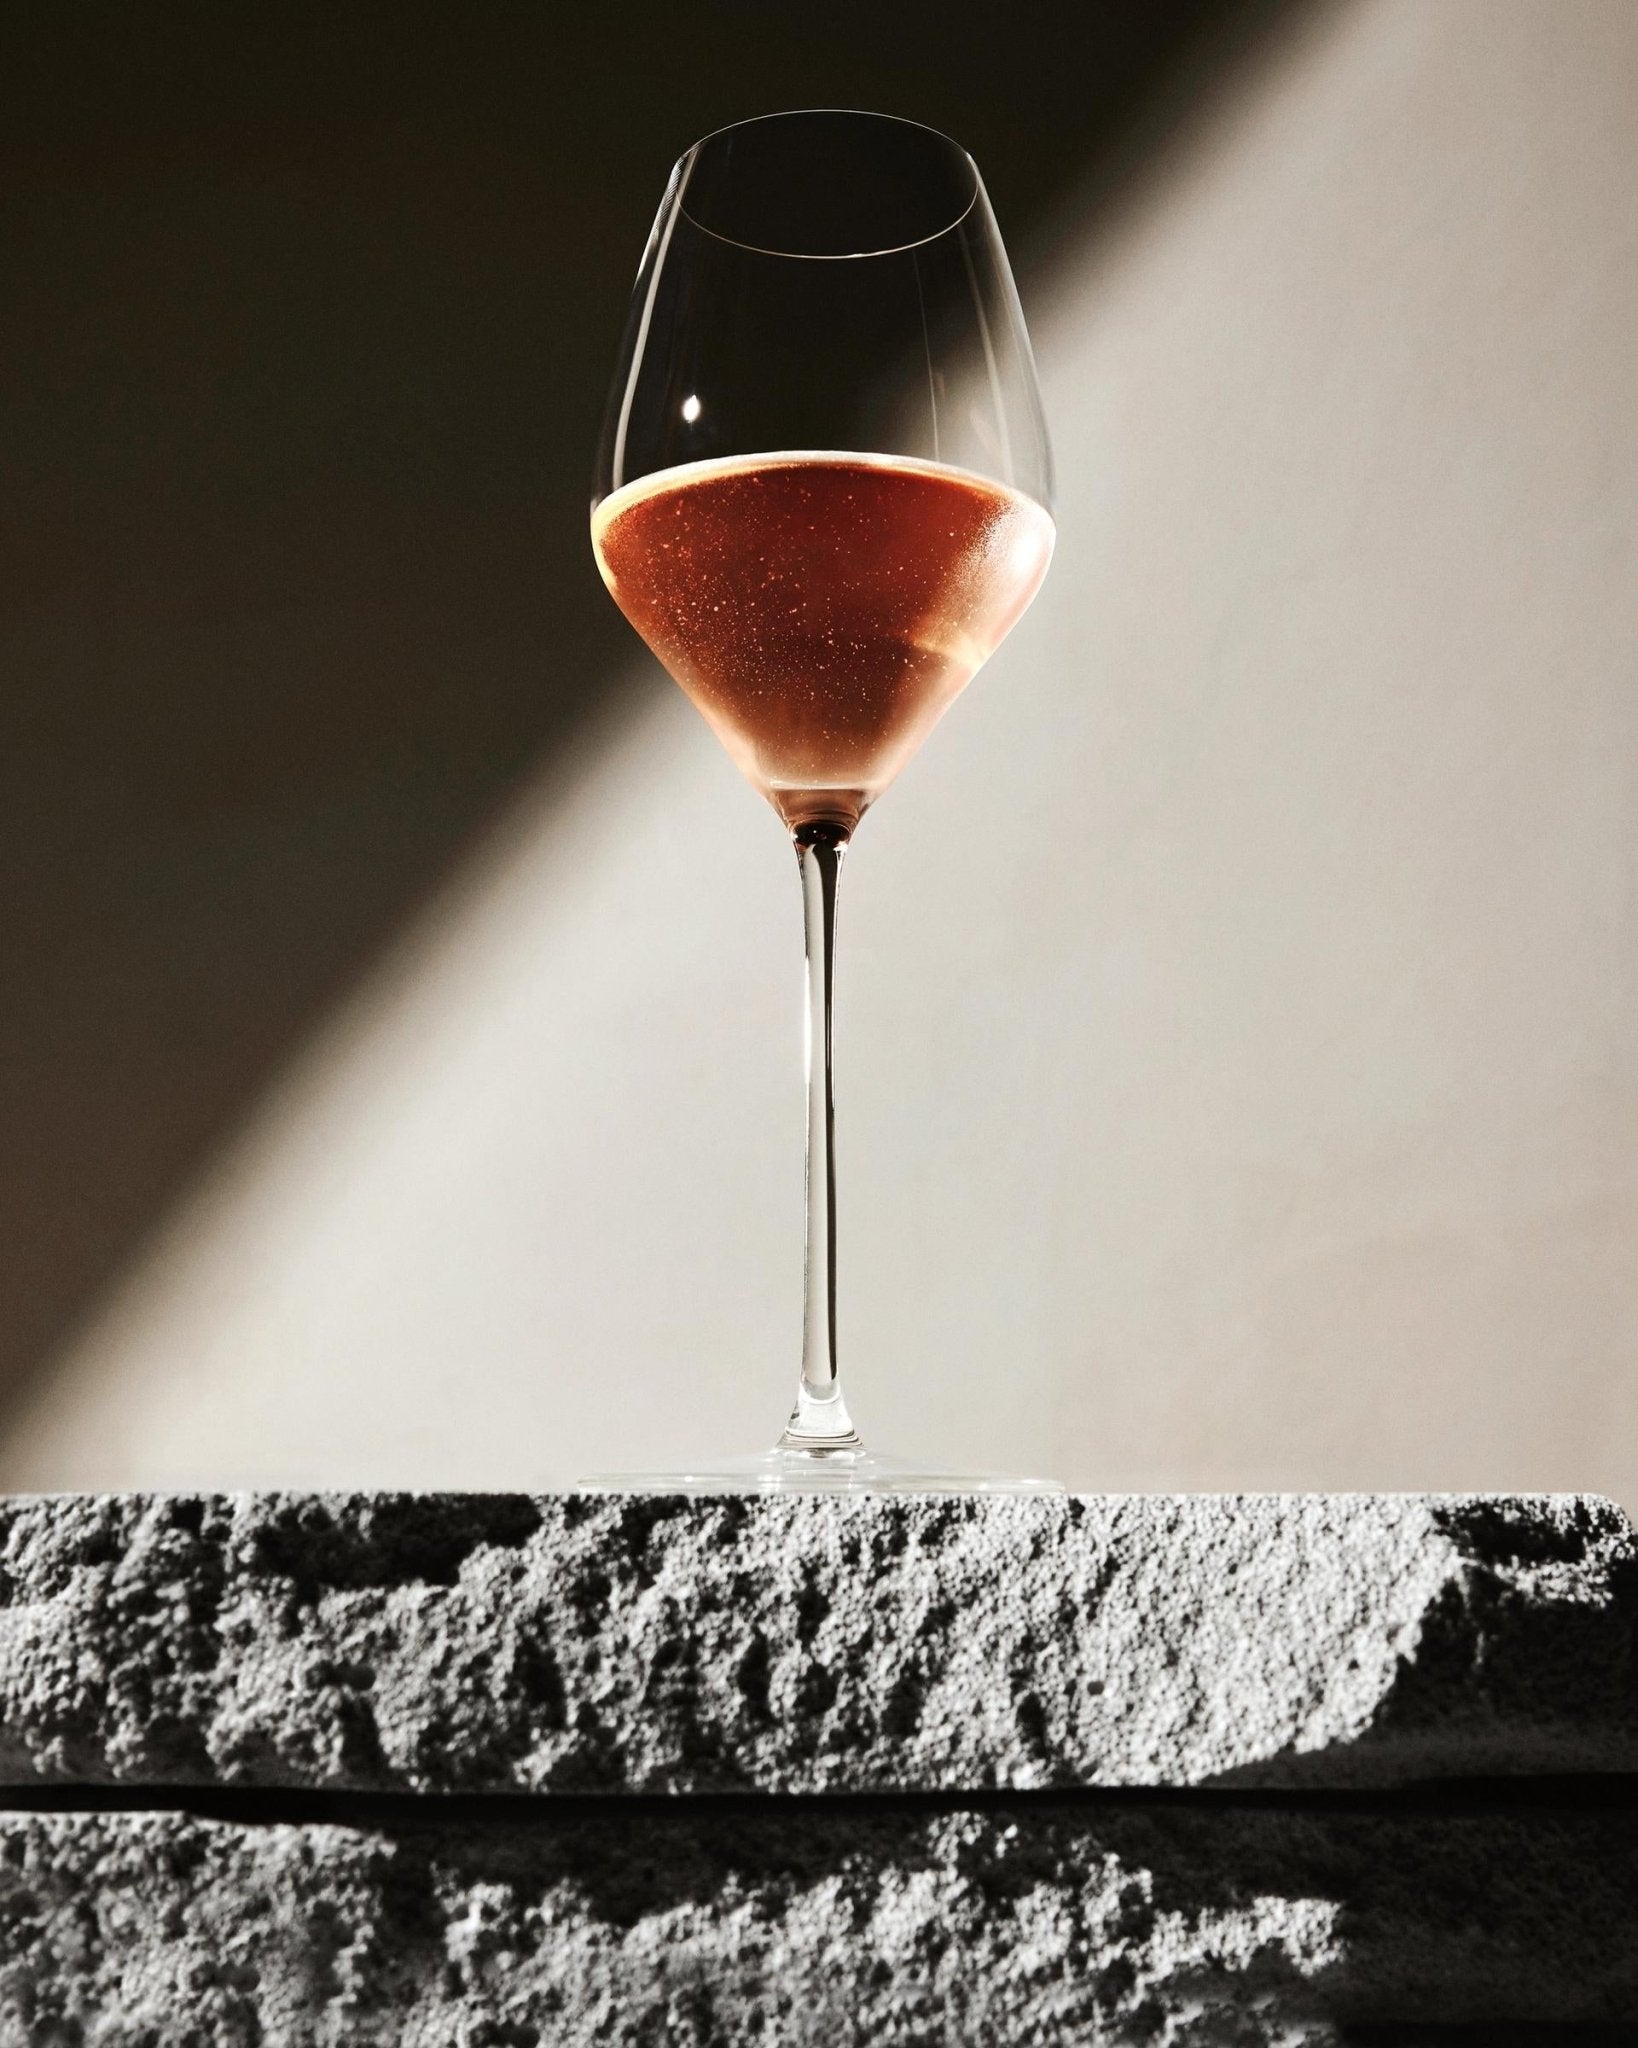 Dom Pérignon Brut Rosé Vintage Champagne 2008 | Exquisite Wine & Alcohol Gift Delivery Toronto Canada | Vyno